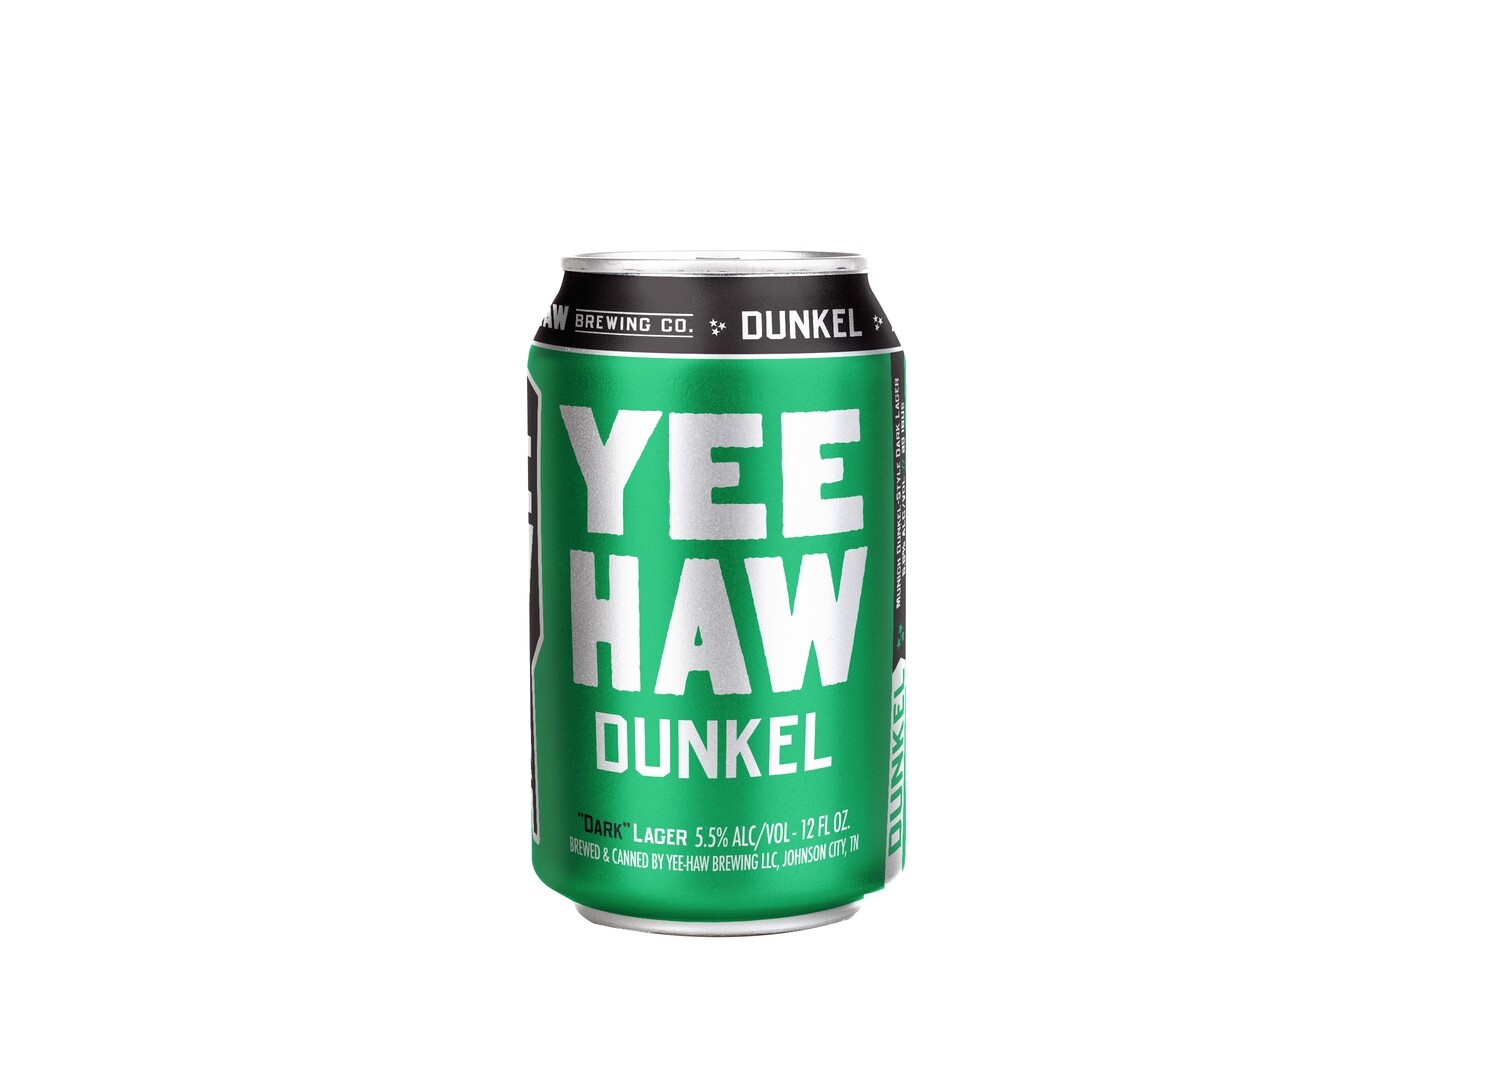 Yee-haw Dunkel